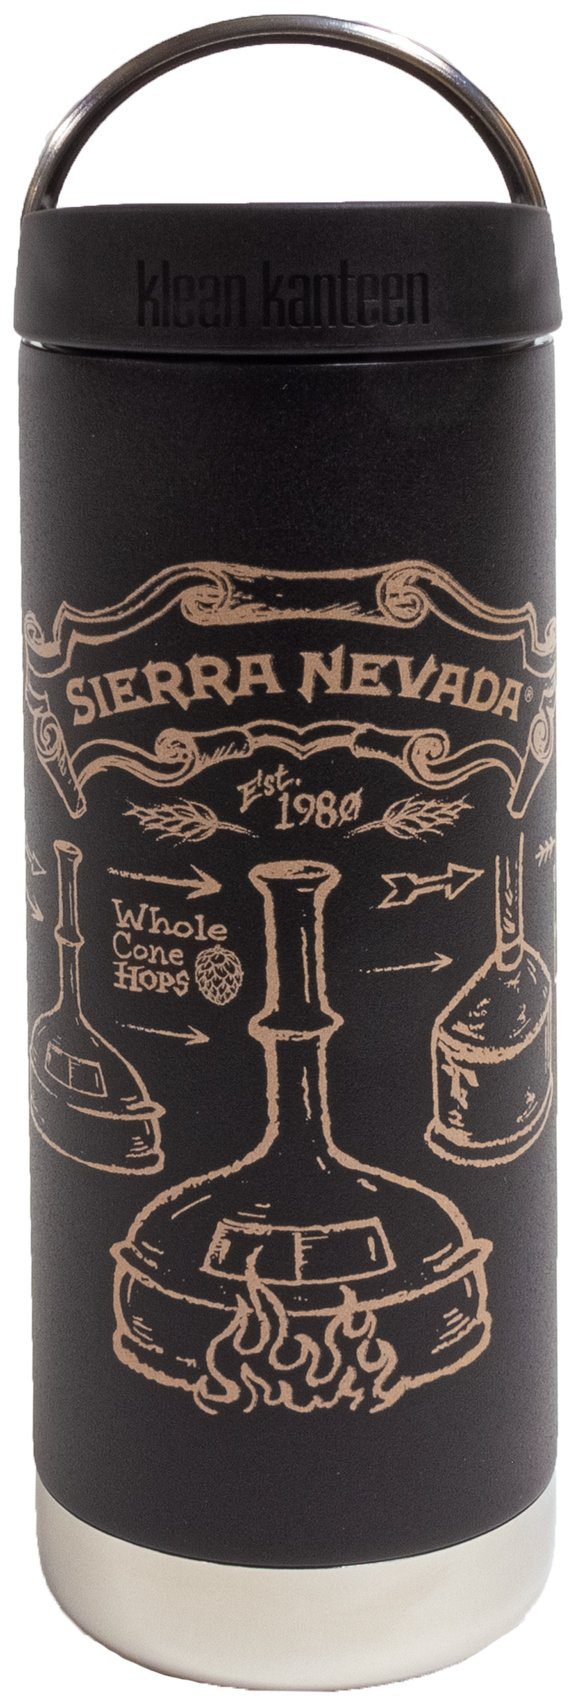 Klean Kanteen Insulated 16oz. Bottle with Sierra Nevada logo and artwork